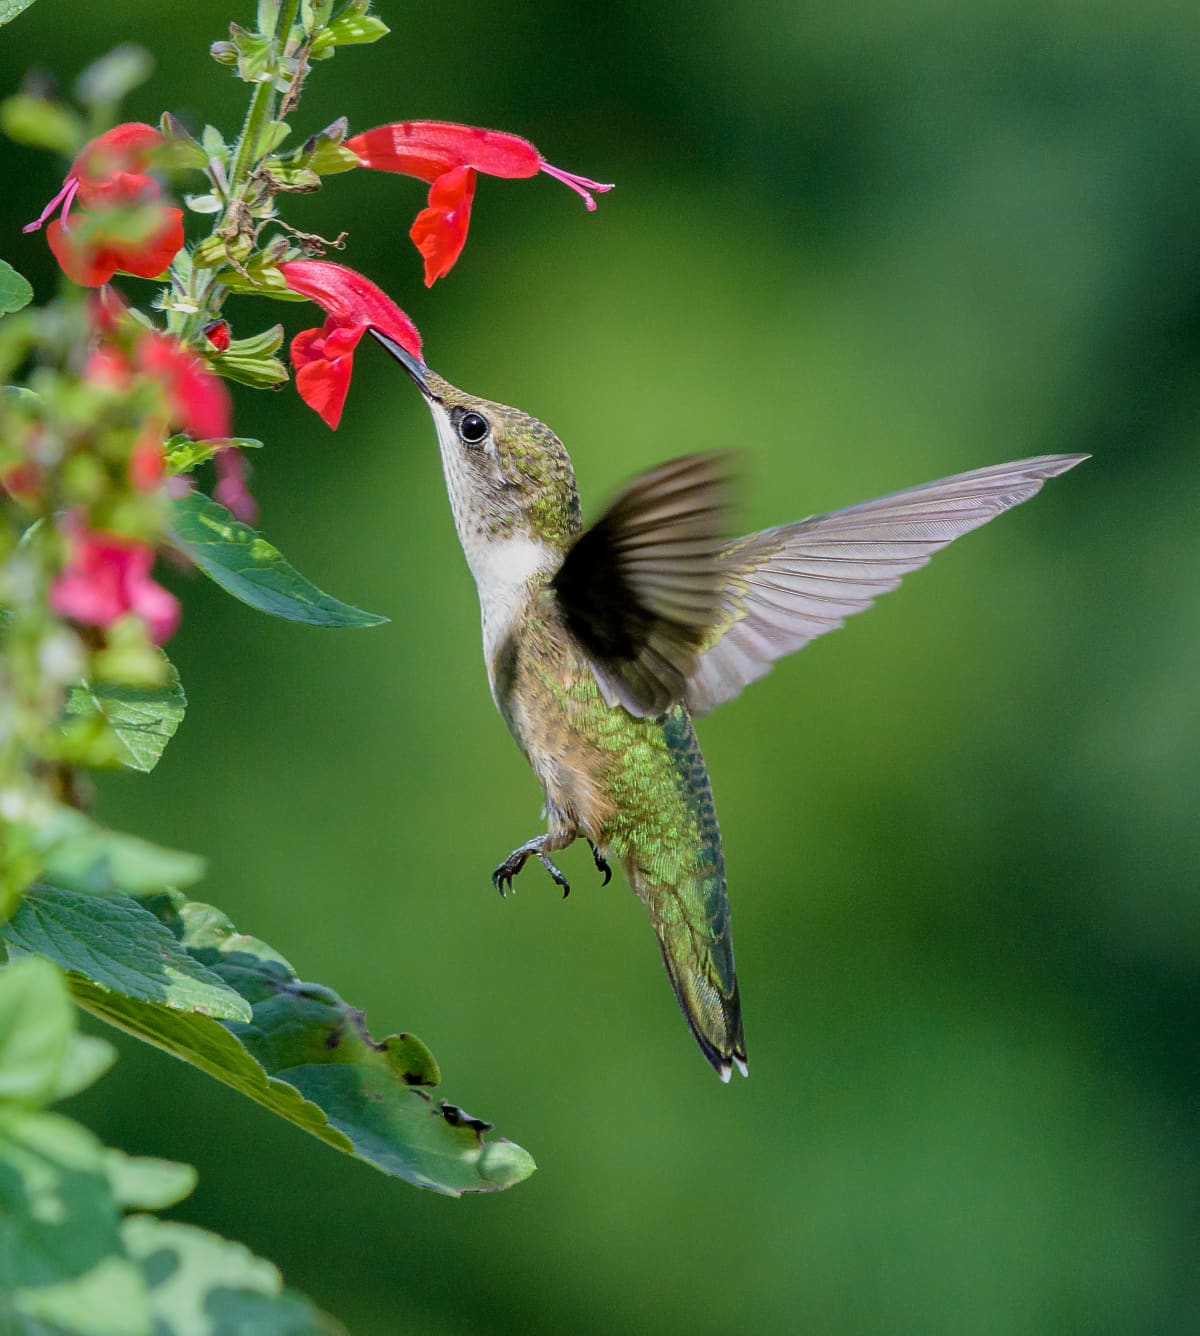 Ruby-throated Hummingbird feeding on flowers.